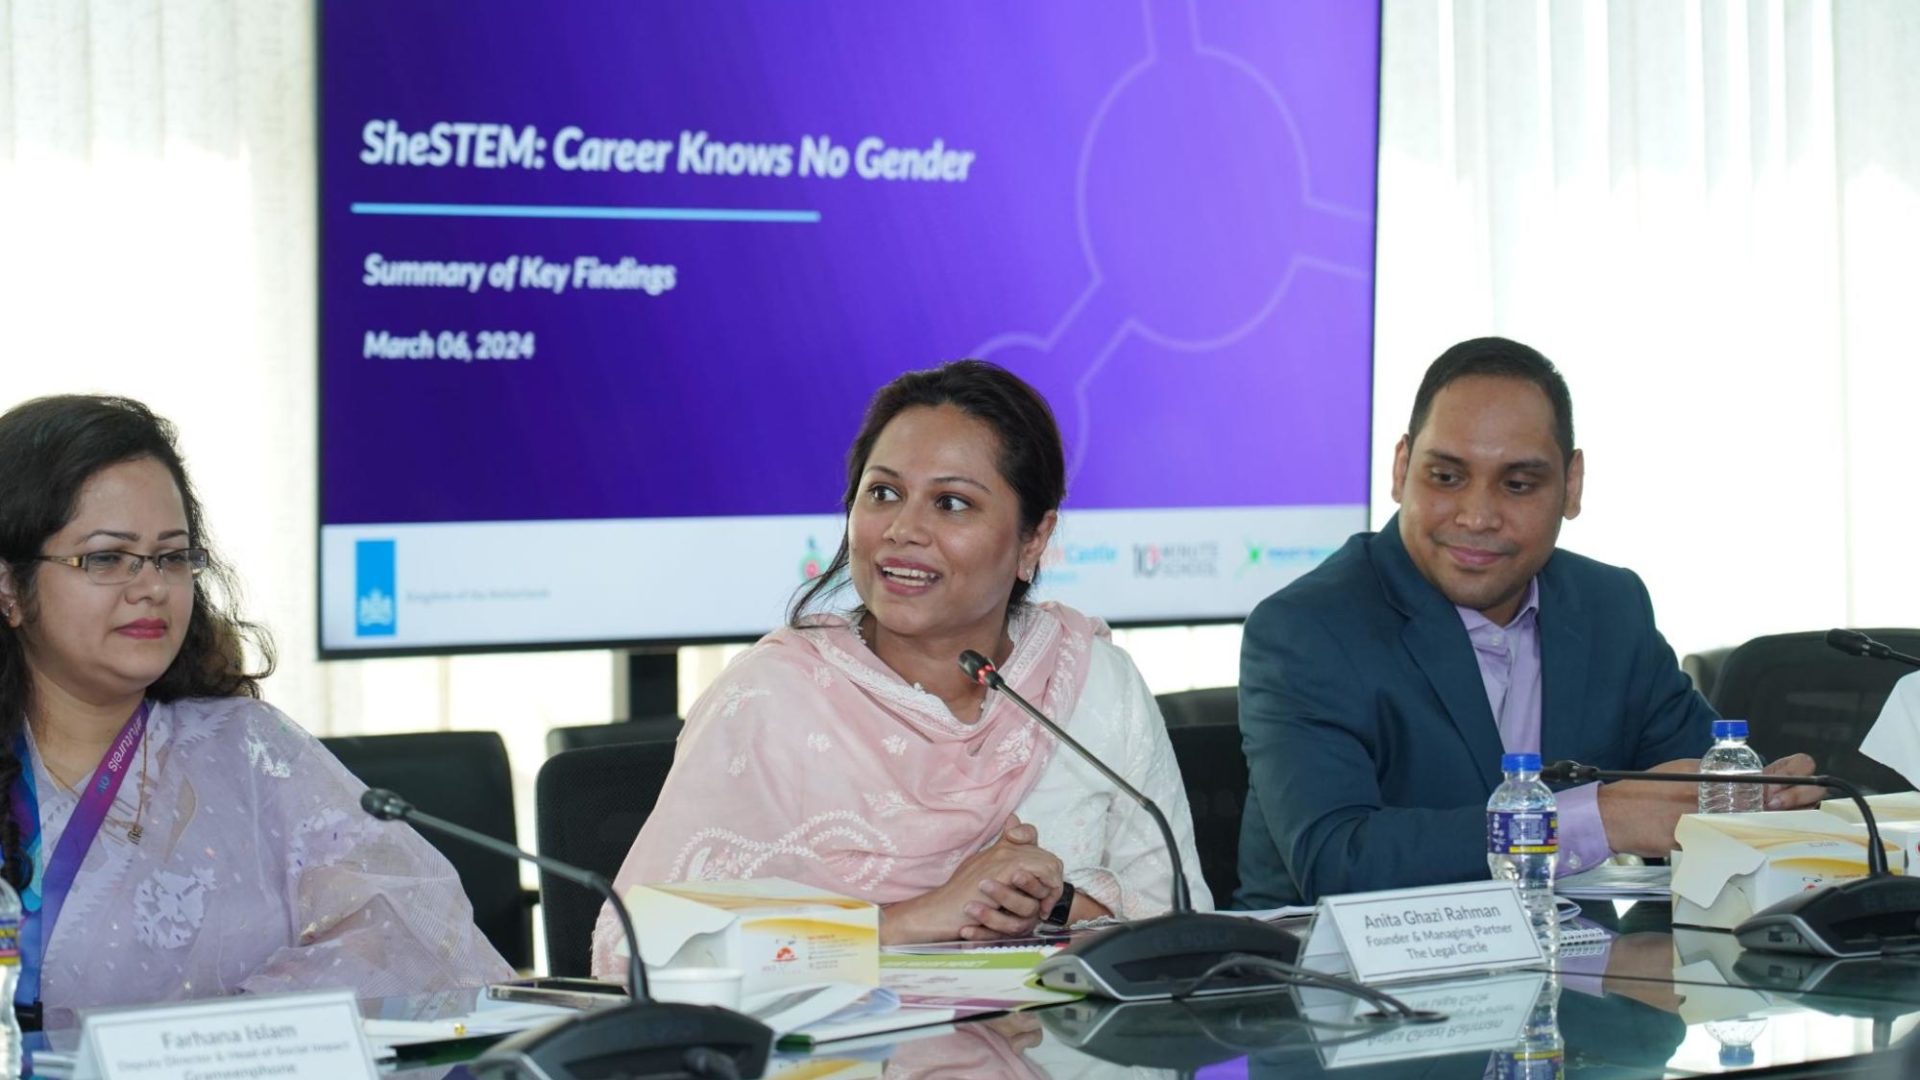 From left to right: Farhana Islam, Deputy Director and Head of Social Impact, Grameenphone, Anita Ghazi Rahman, Founder & Managing Partner of The Legal Circle, Bijon Islam, CEO of LightCastle Partners